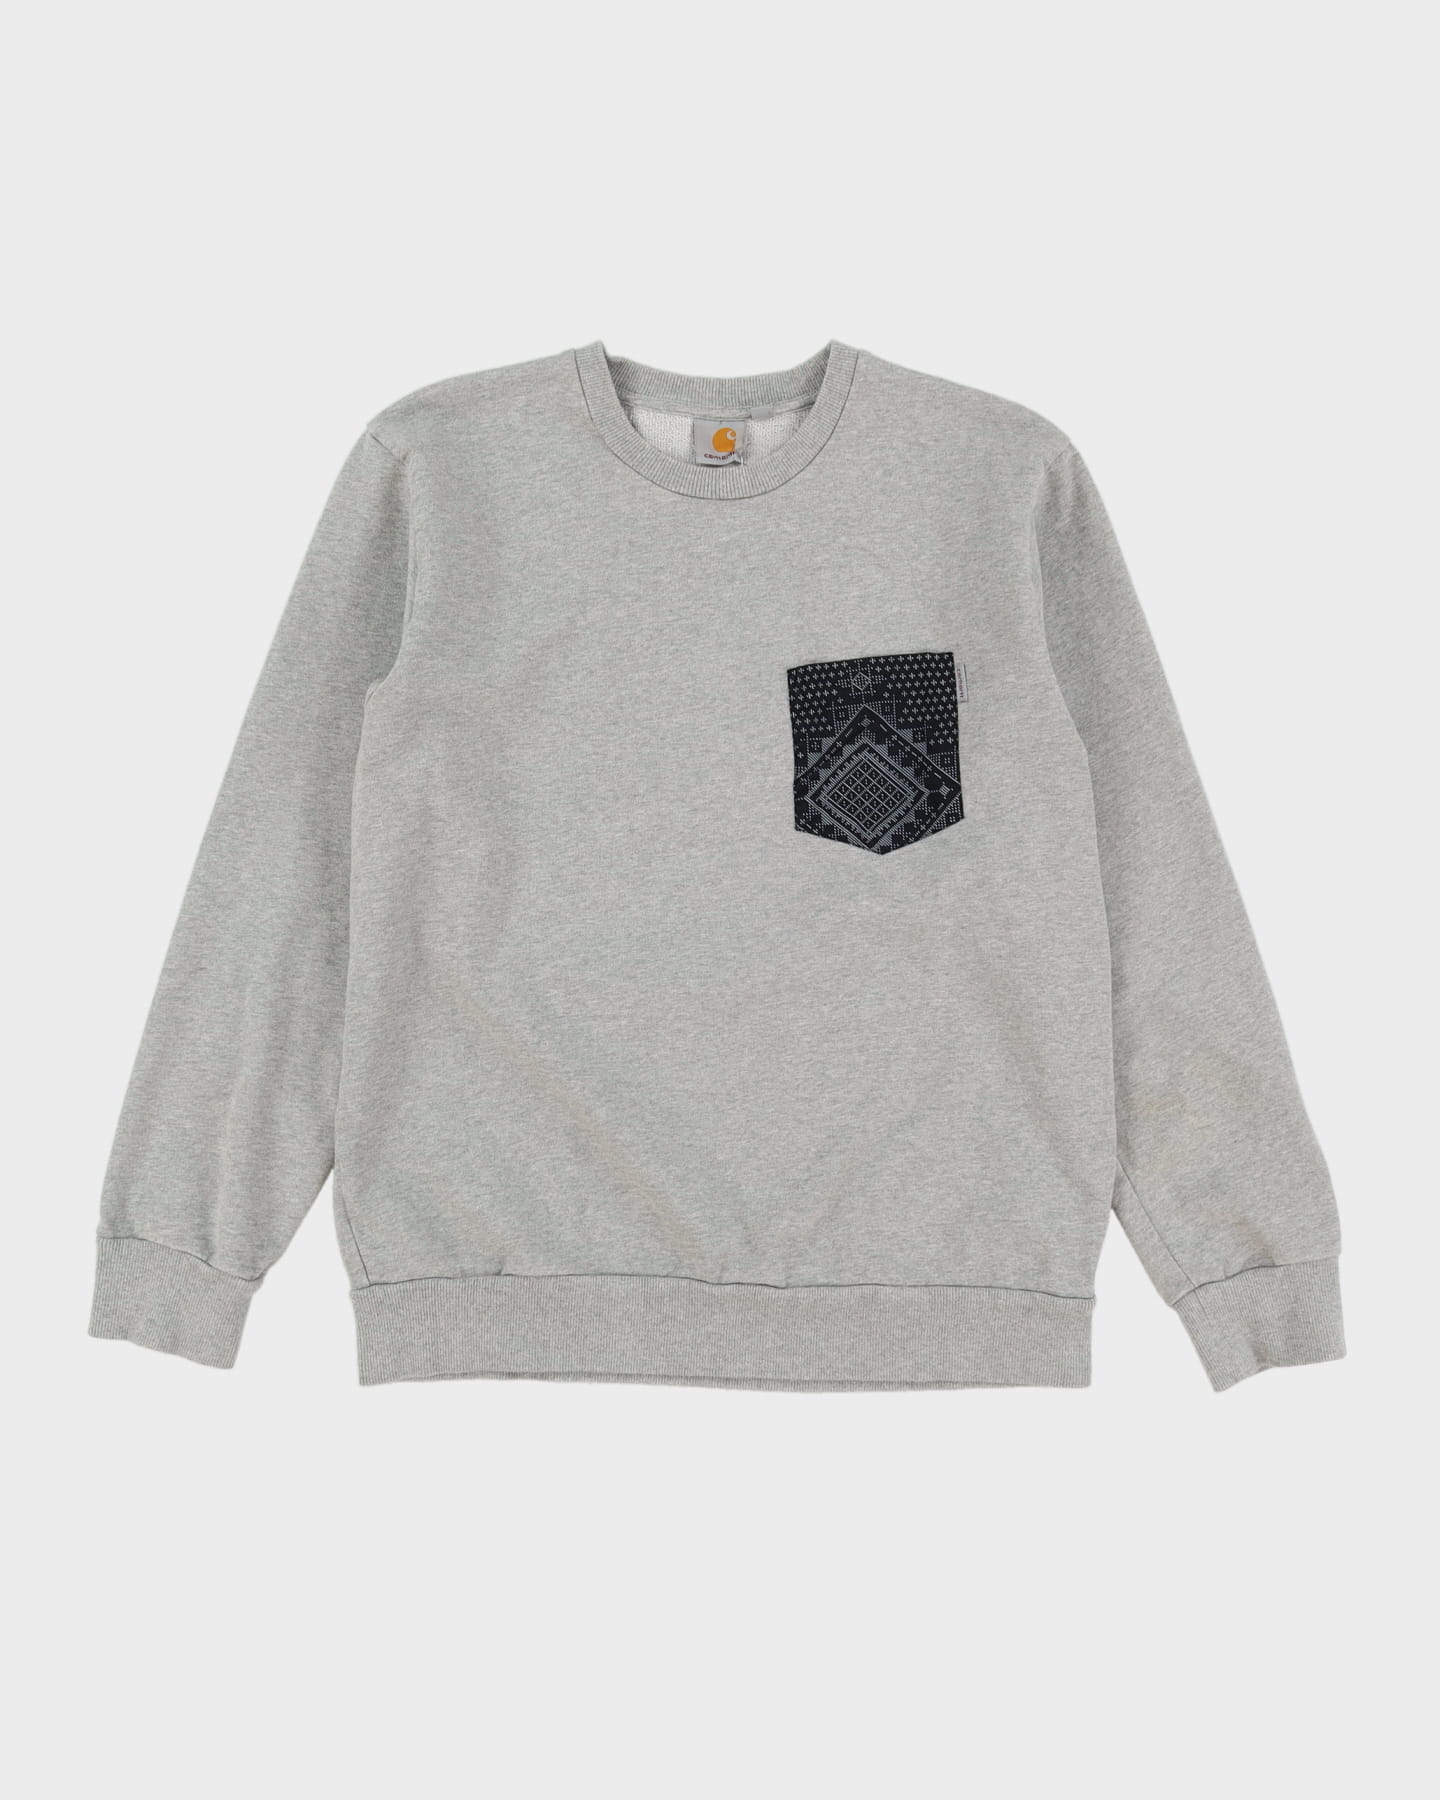 Carhartt Grey Pocket Sweatshirt - L